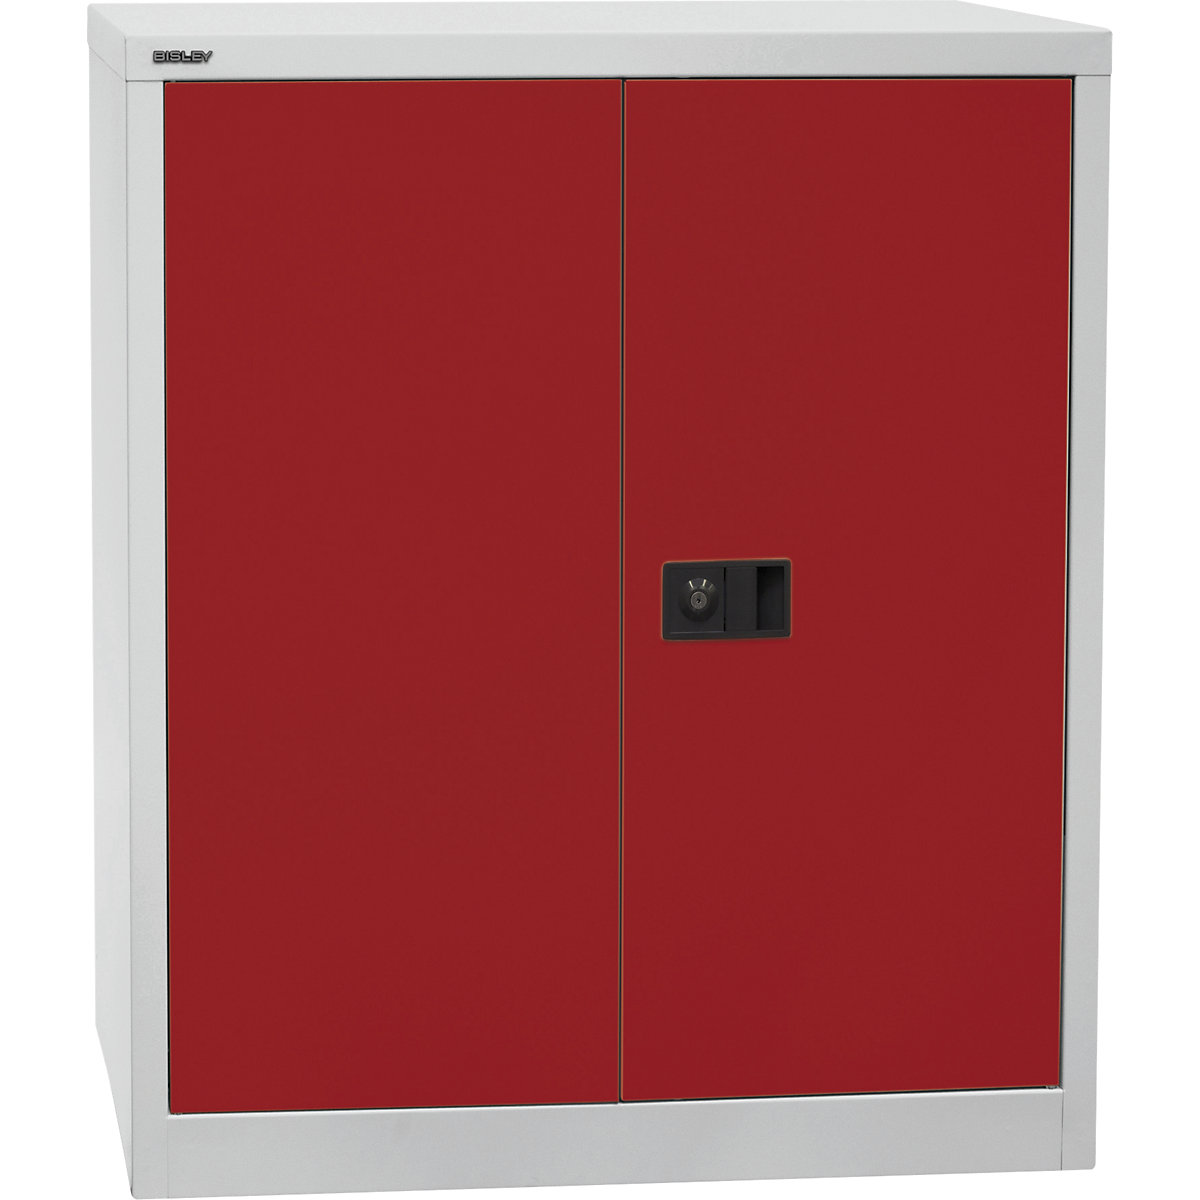 Omara s krilnimi vrati UNIVERSAL – BISLEY, VxŠxG 1000 x 914 x 400 mm, 1 polica, 2 nivoja, svetlo siva / kardinalsko rdeča-3